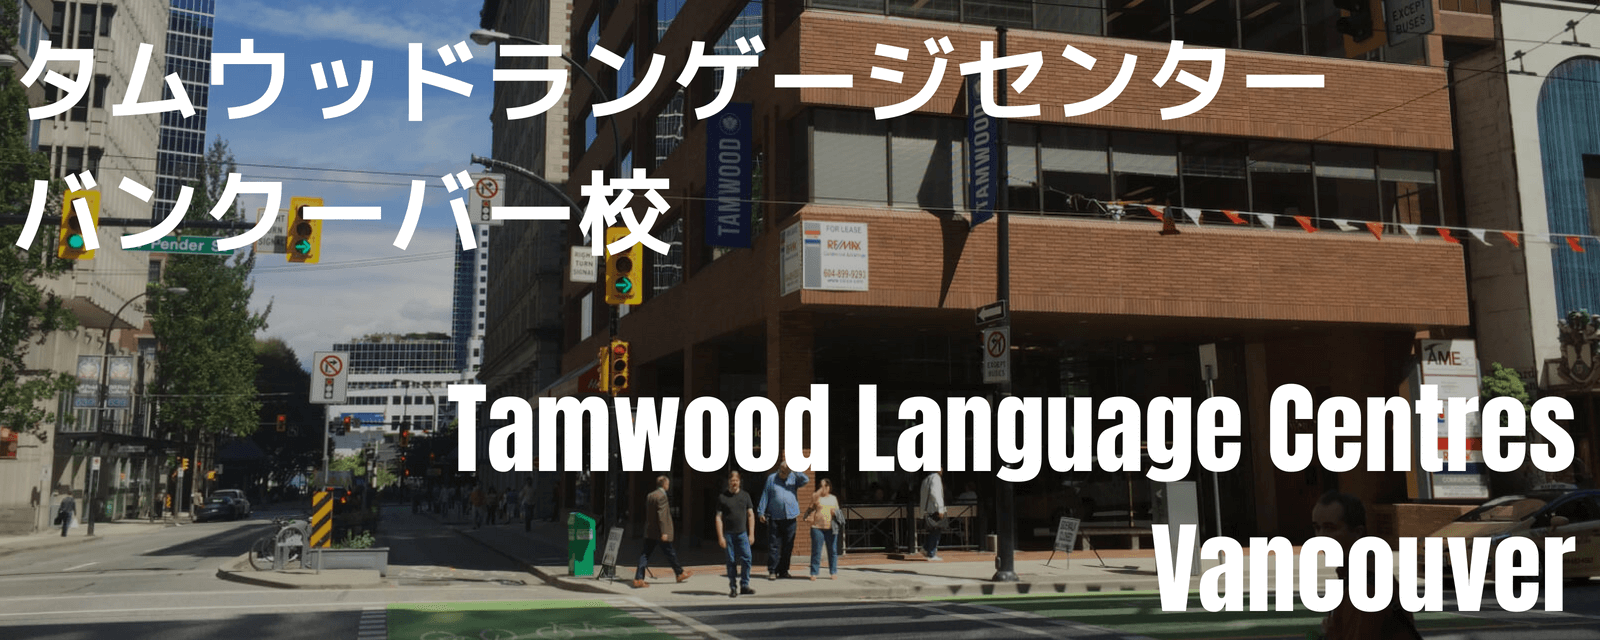 Tamwood Language Centres Vancouver